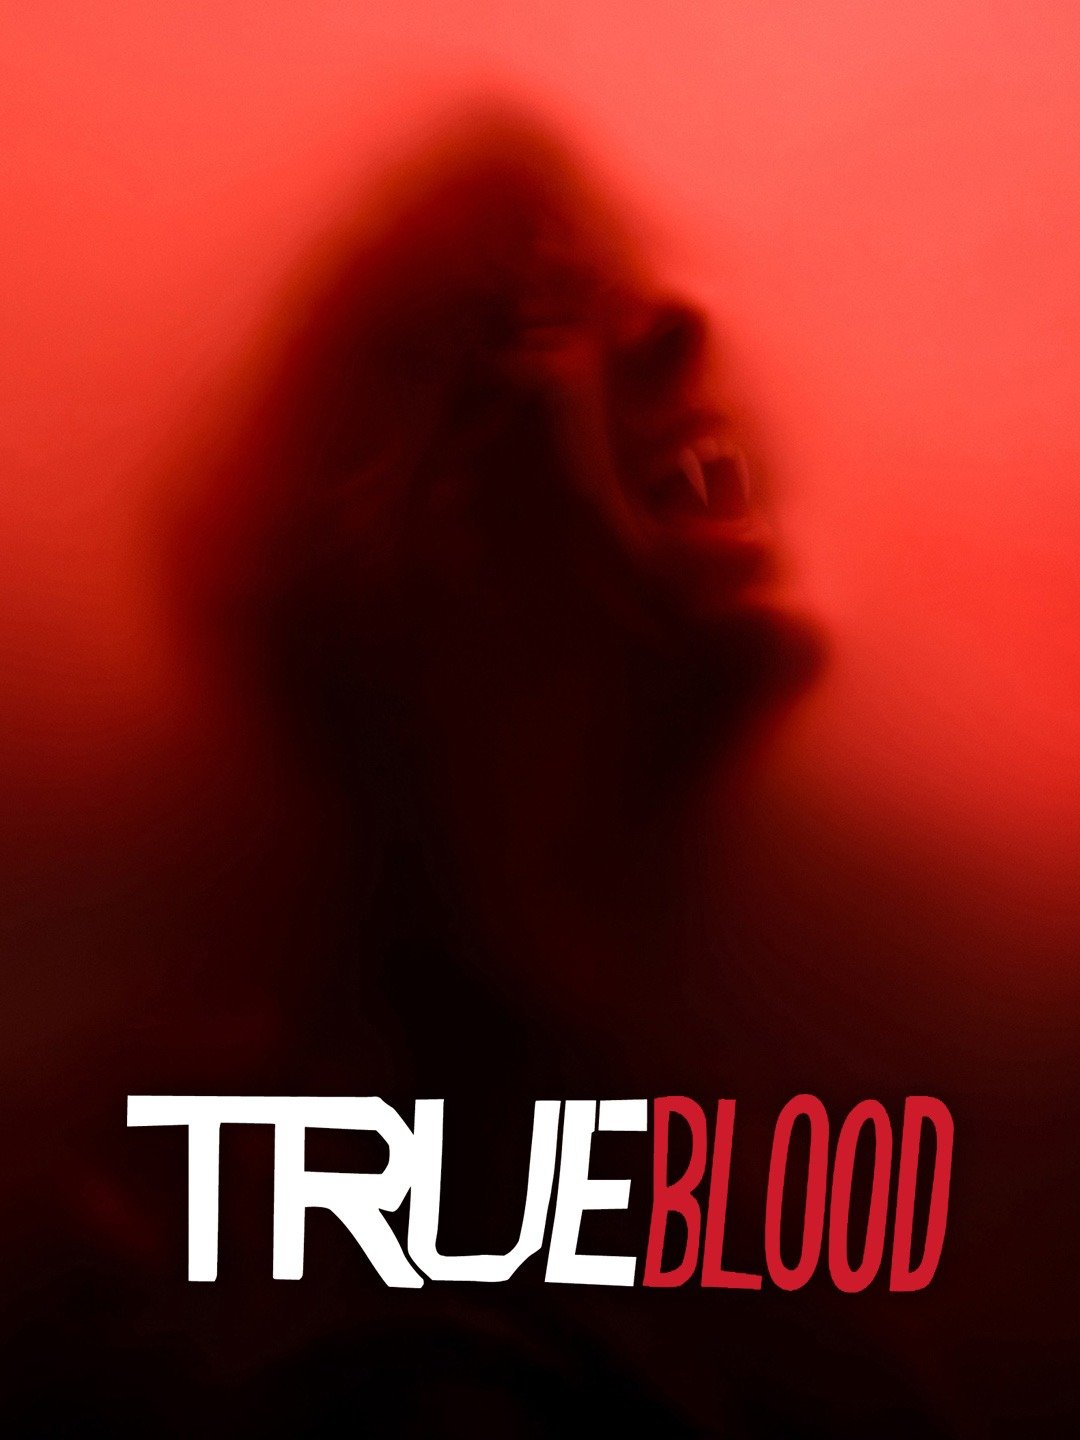 true blood eric northman season 6